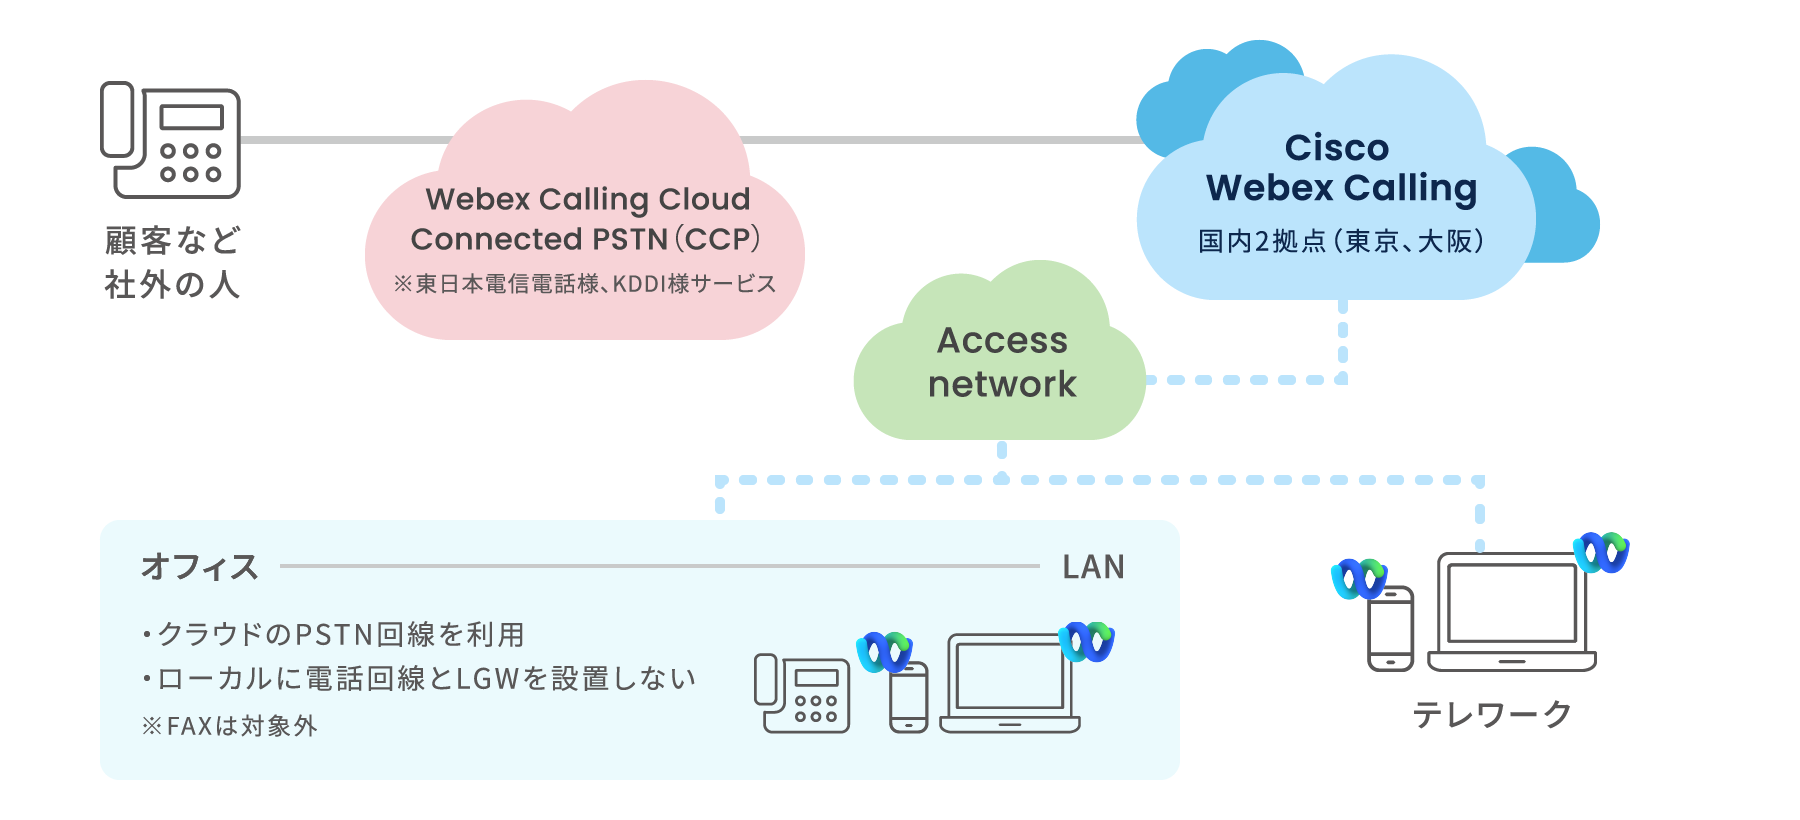 Webex Calling by Cisco。クラウド回線サービス（Cloud Connected PSTN）提供エリアのお客様向け構成